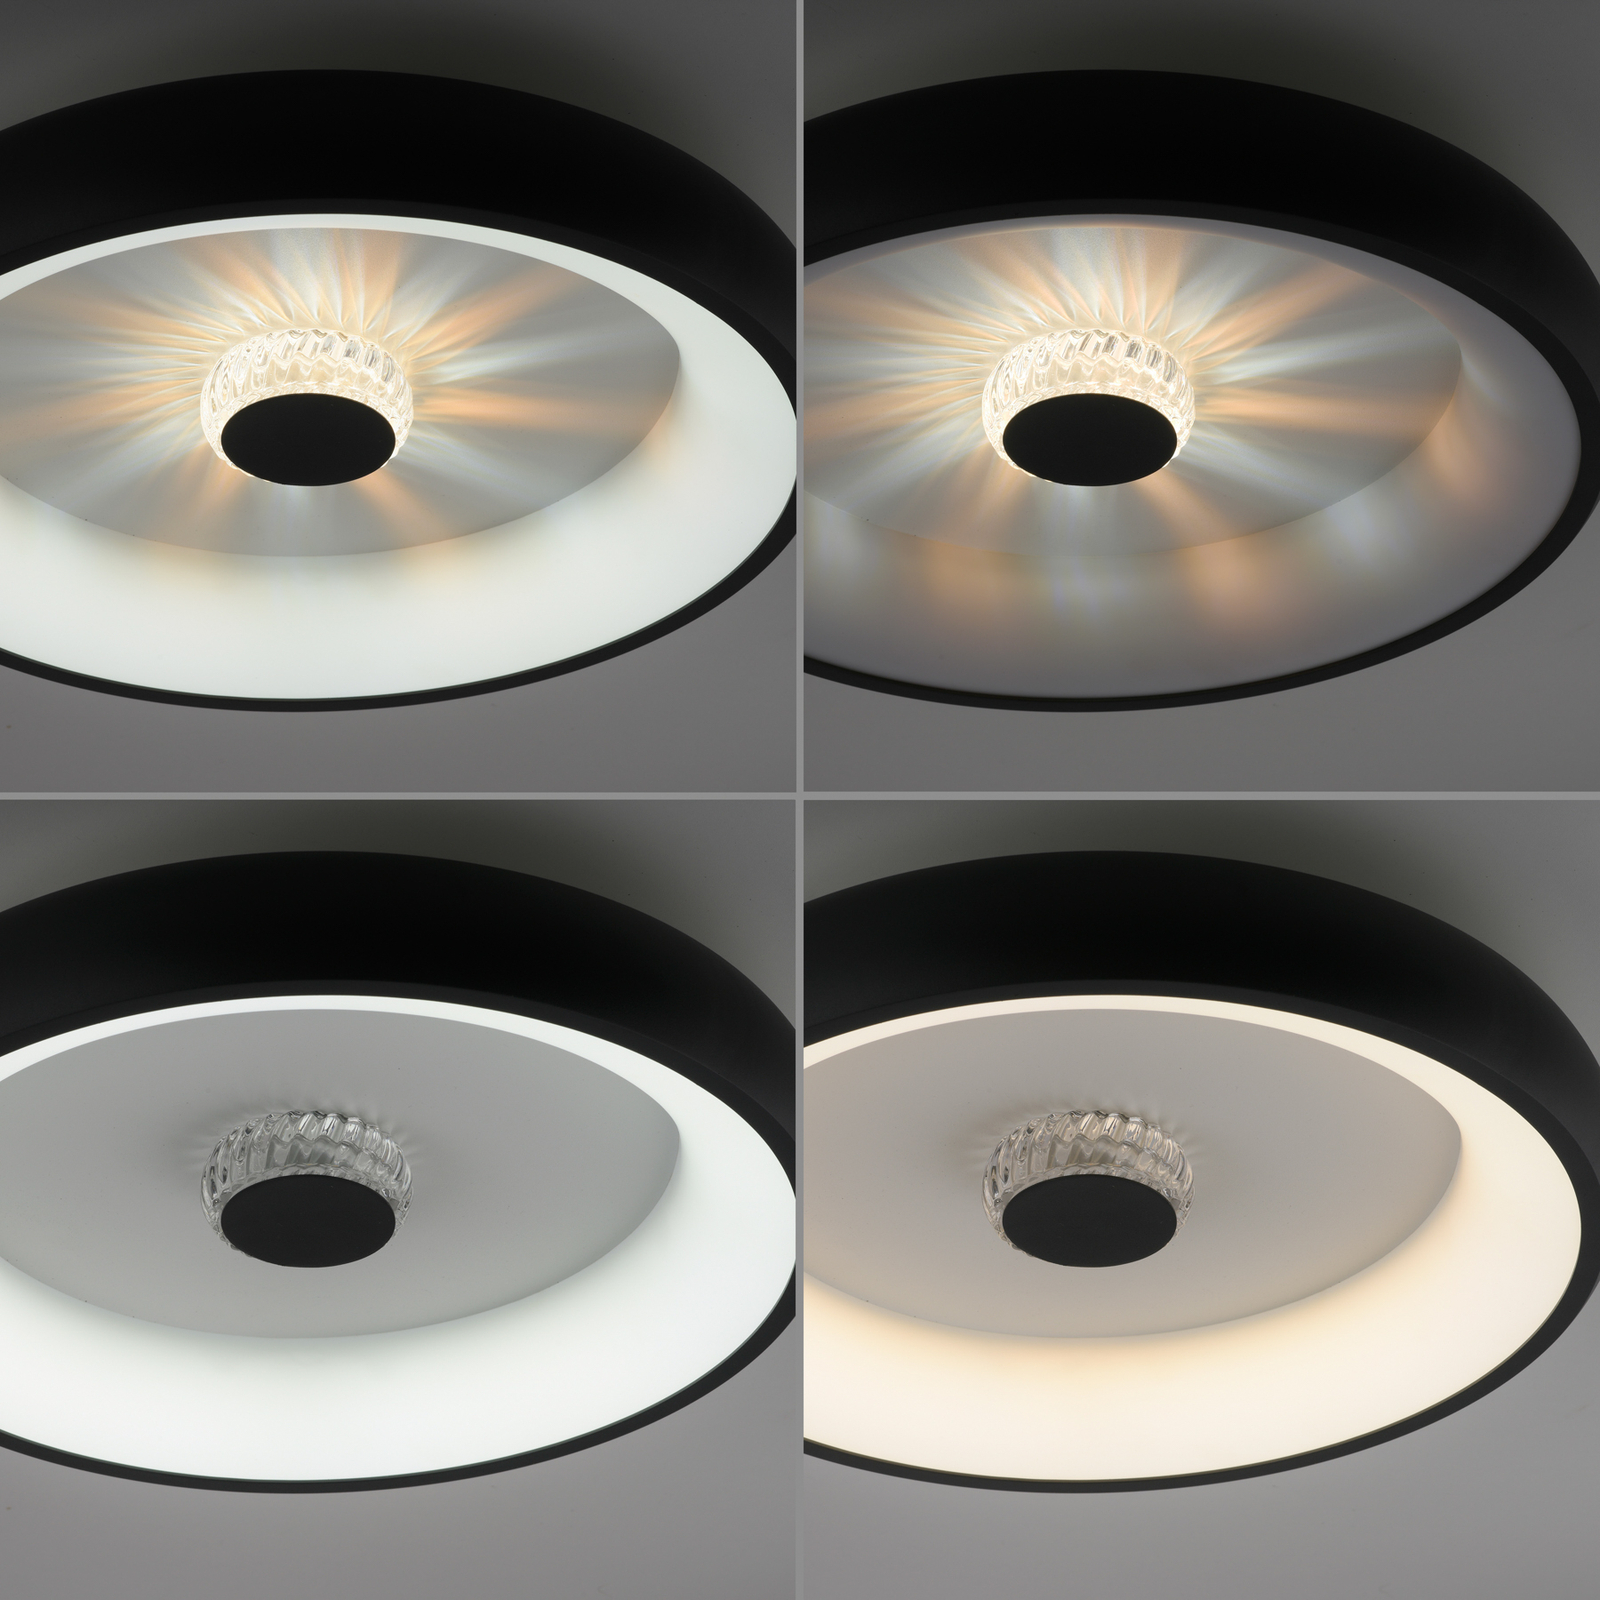 Stropní svítidlo Vertigo LED, CCT, Ø 46,5 cm, černé